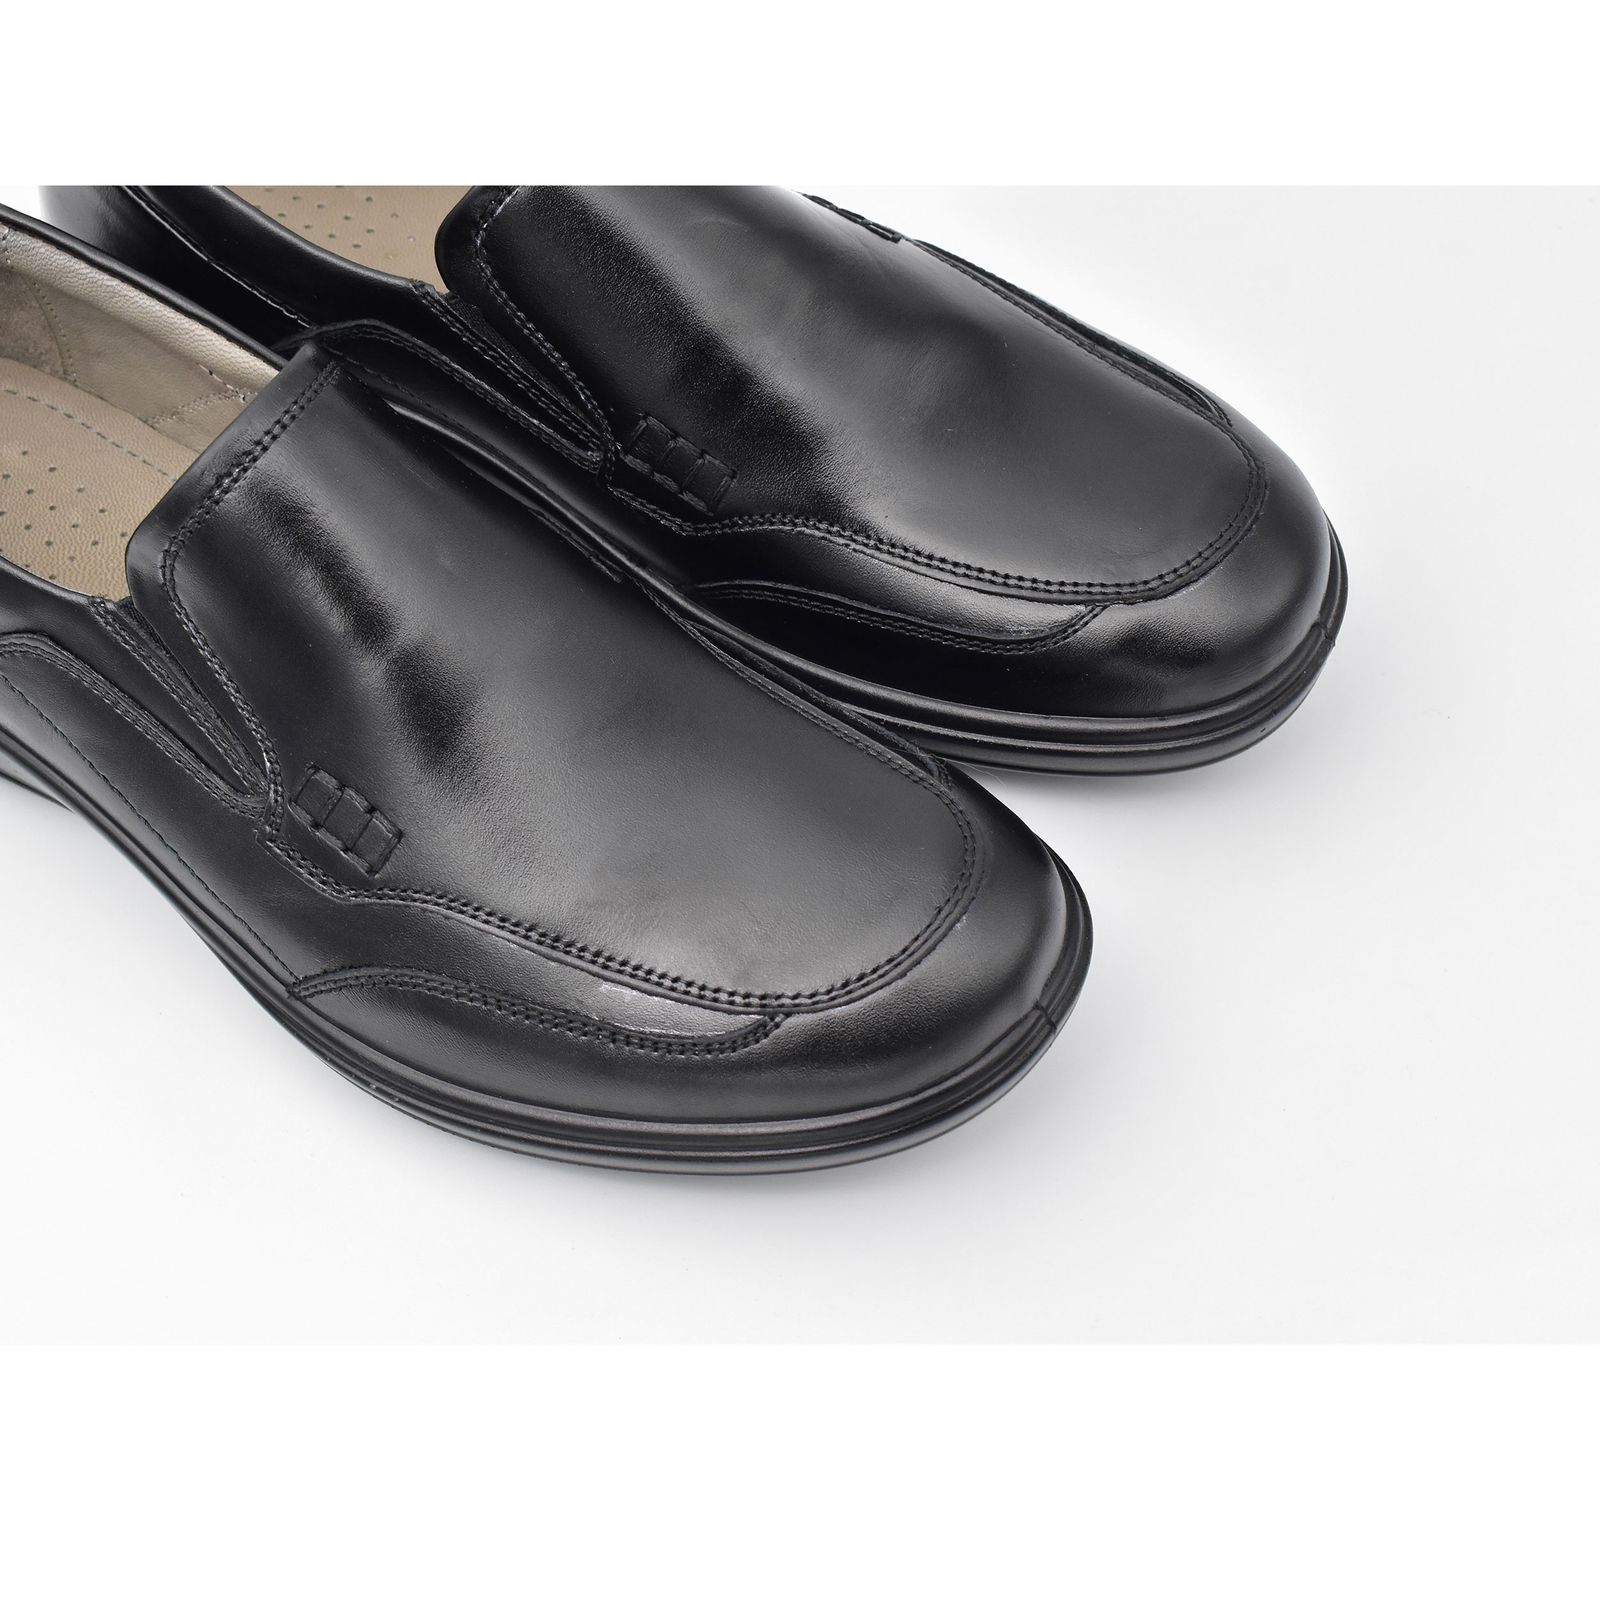 کفش روزمره مردانه پاما مدل TW کد G1122 -  - 4